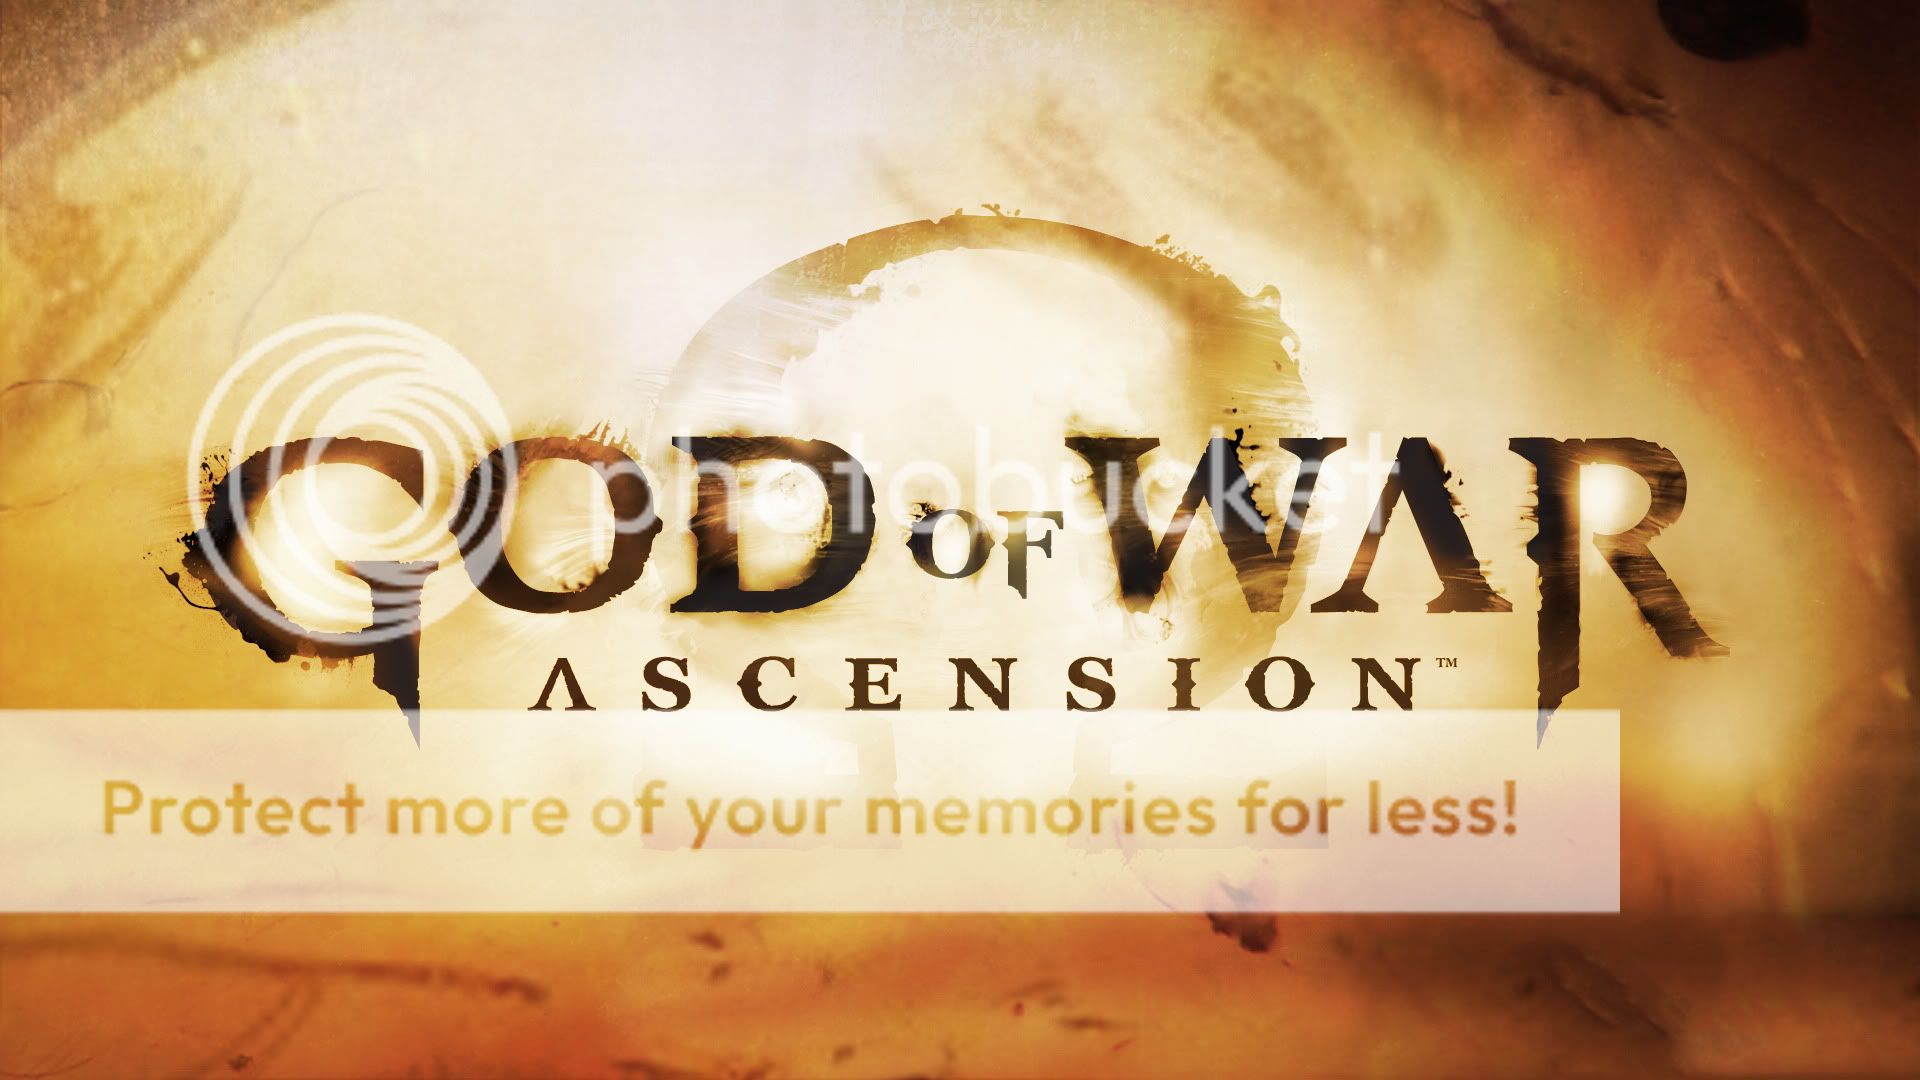 god_of_war_ascension_wallpaper_by_cywin-d4wzqdt.jpg